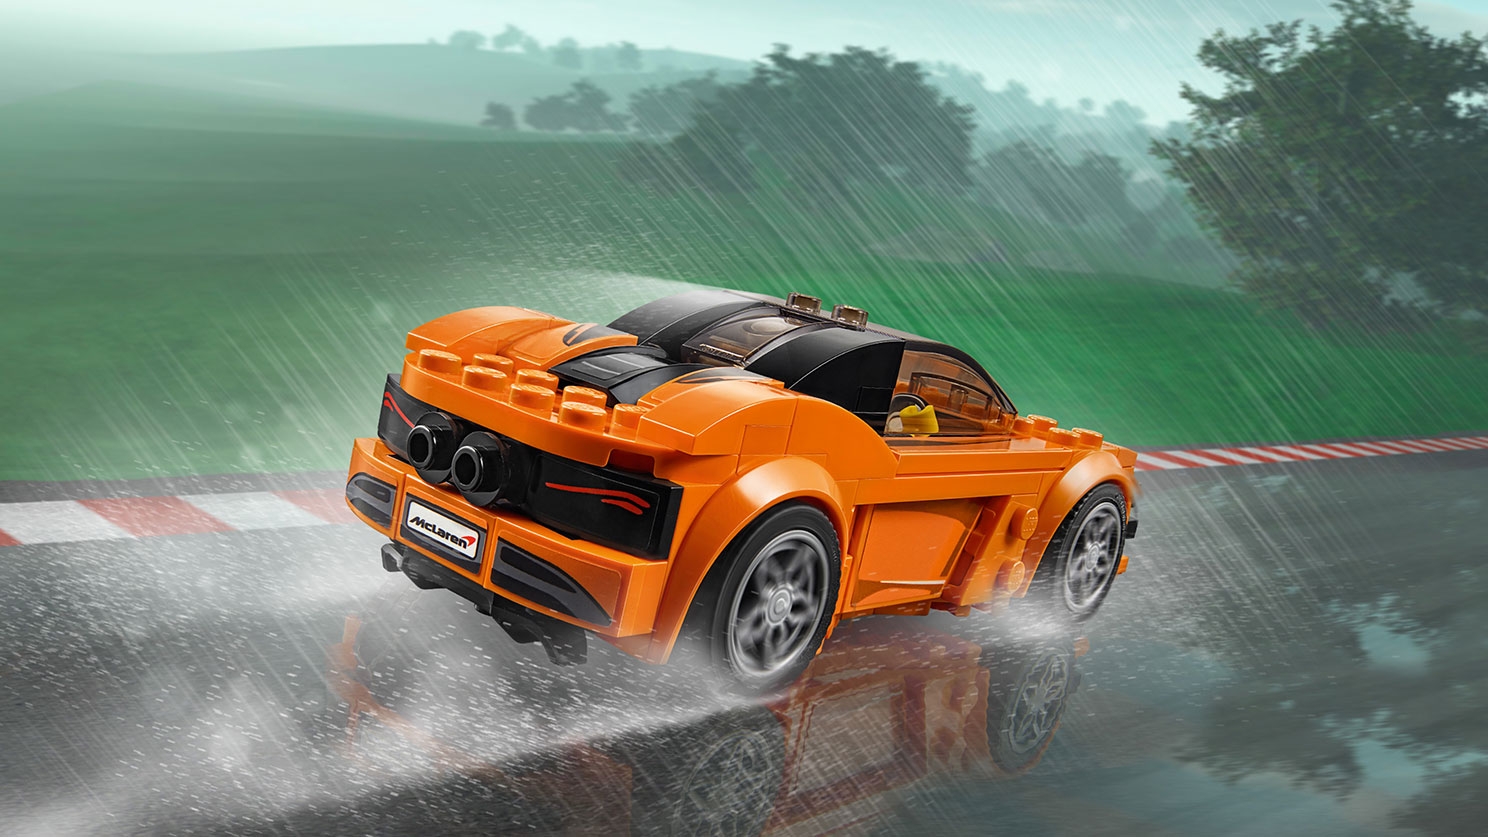  LEGO 75880 Speed Champions McLaren 720S Building Toy, 161pcs,  Orange/Black : Toys & Games